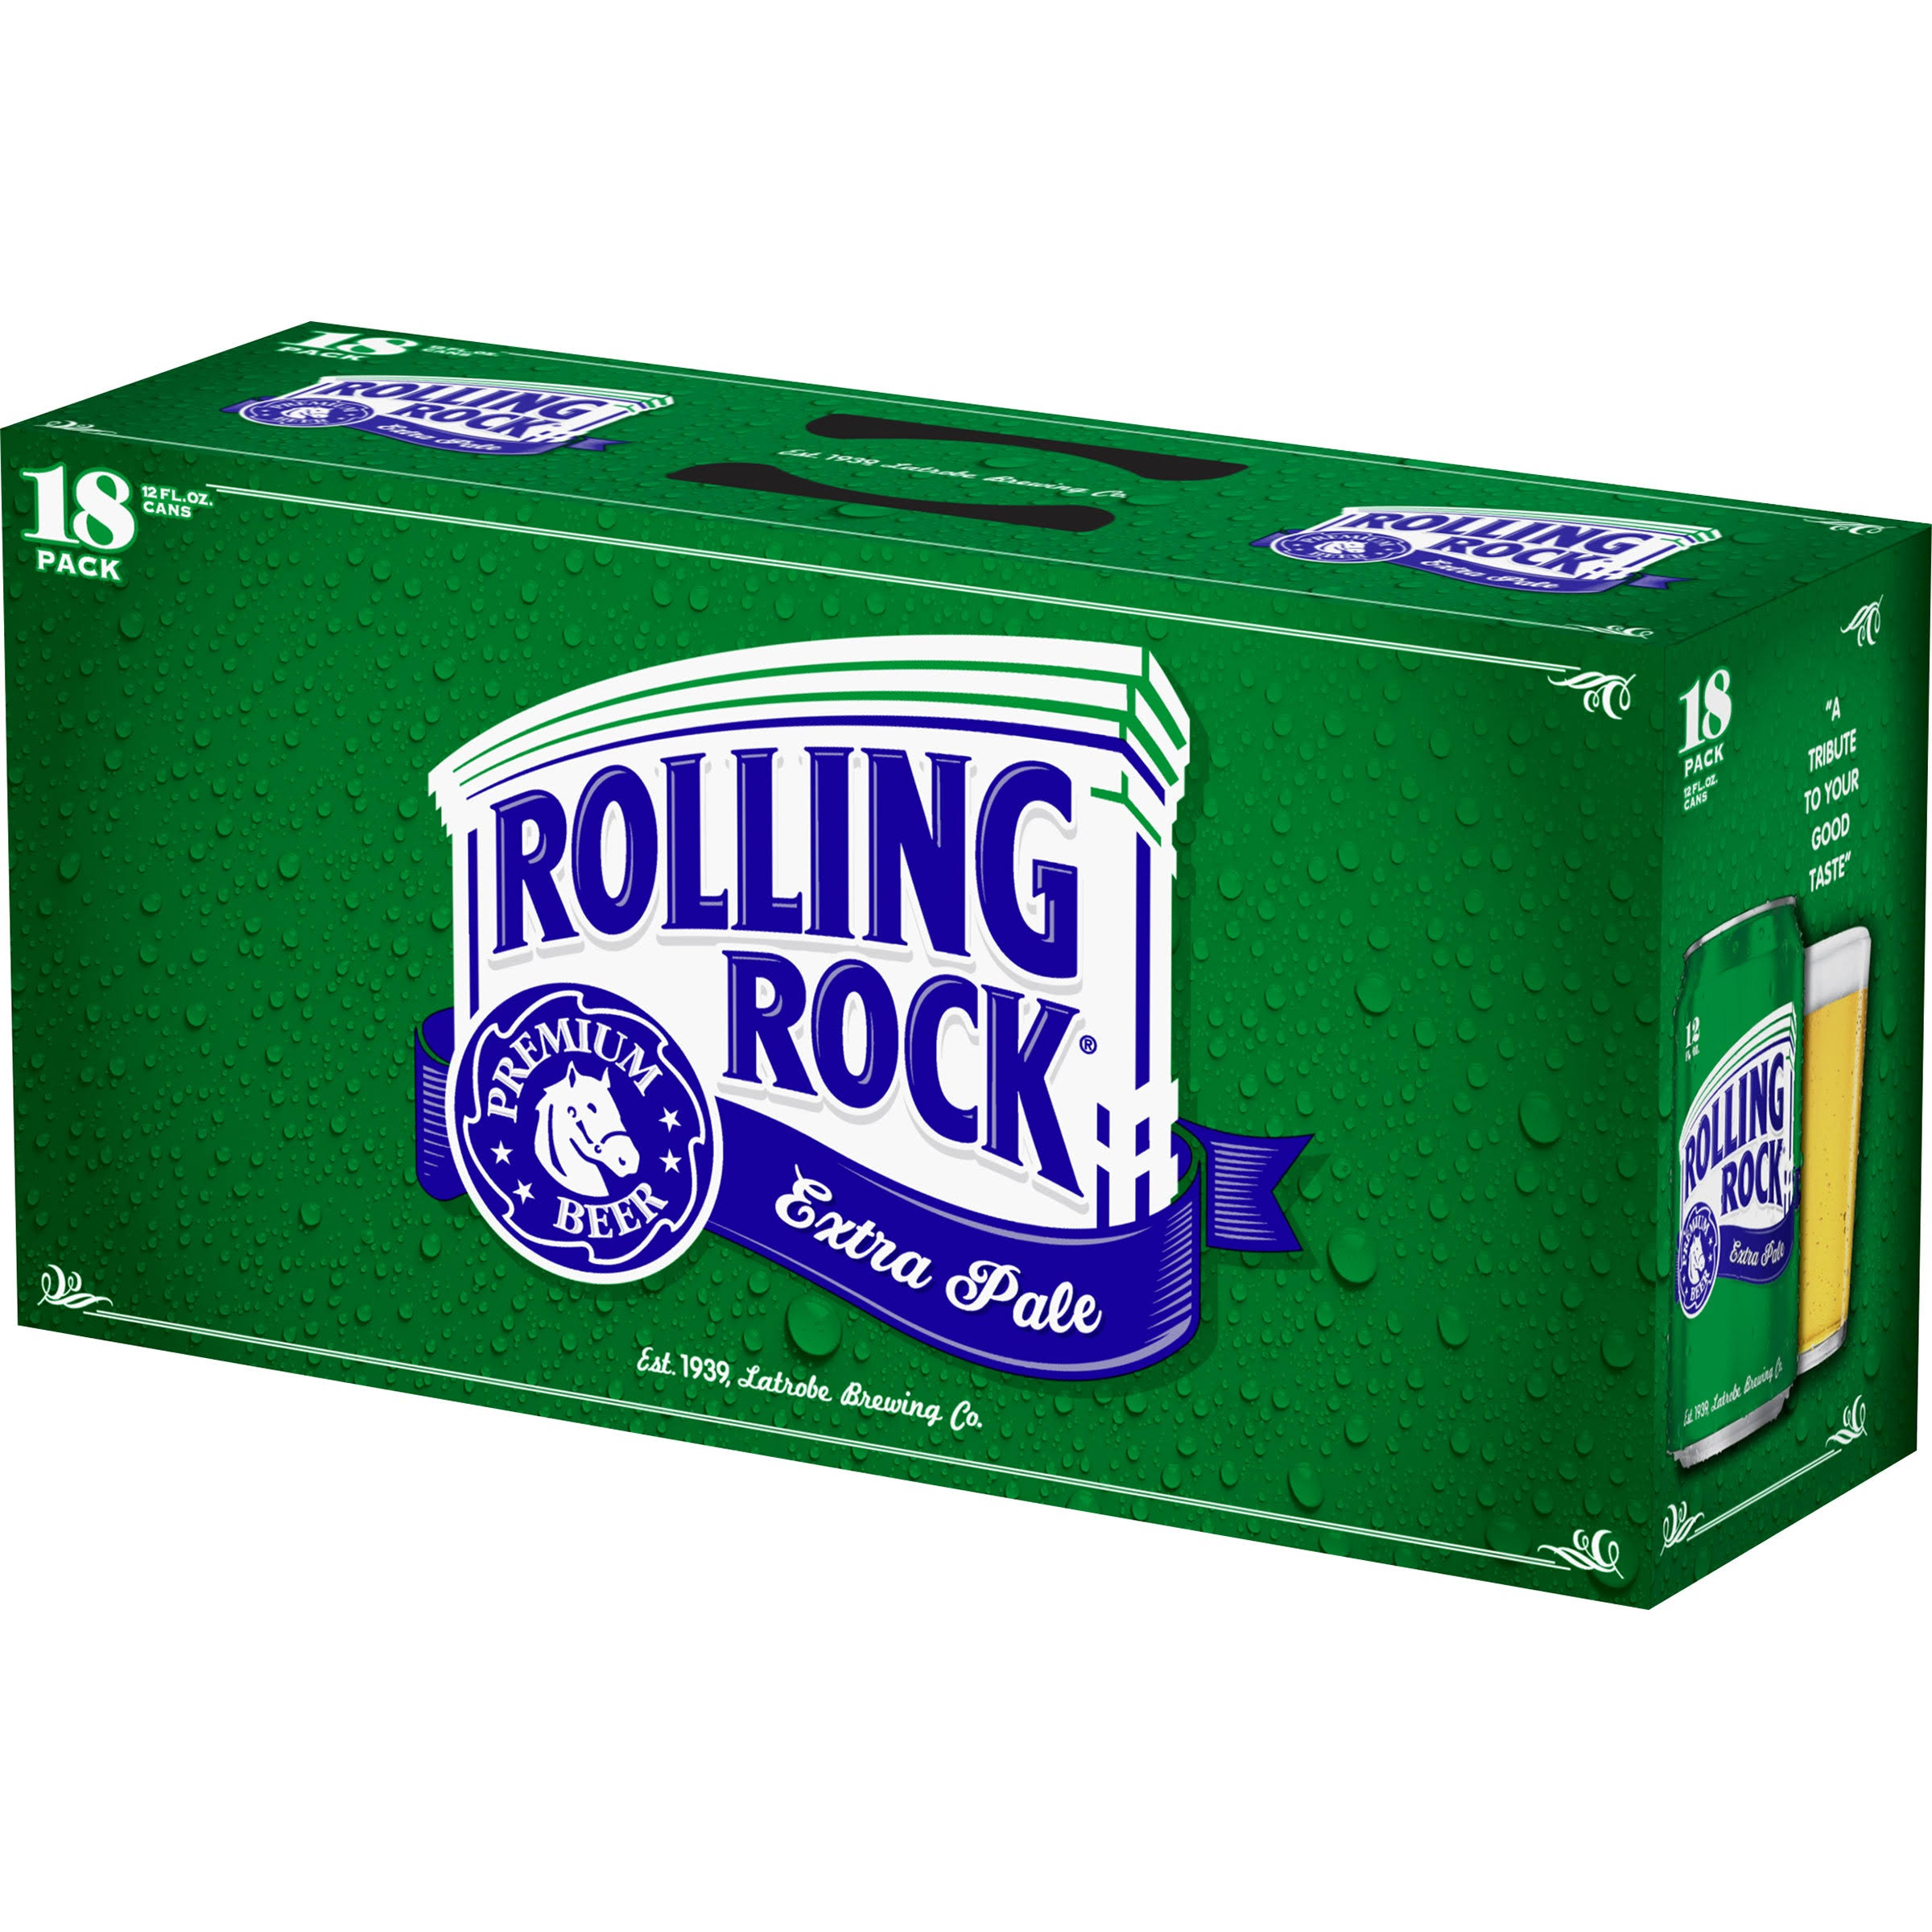 Rolling Rock Beer Premium - Extra Pale